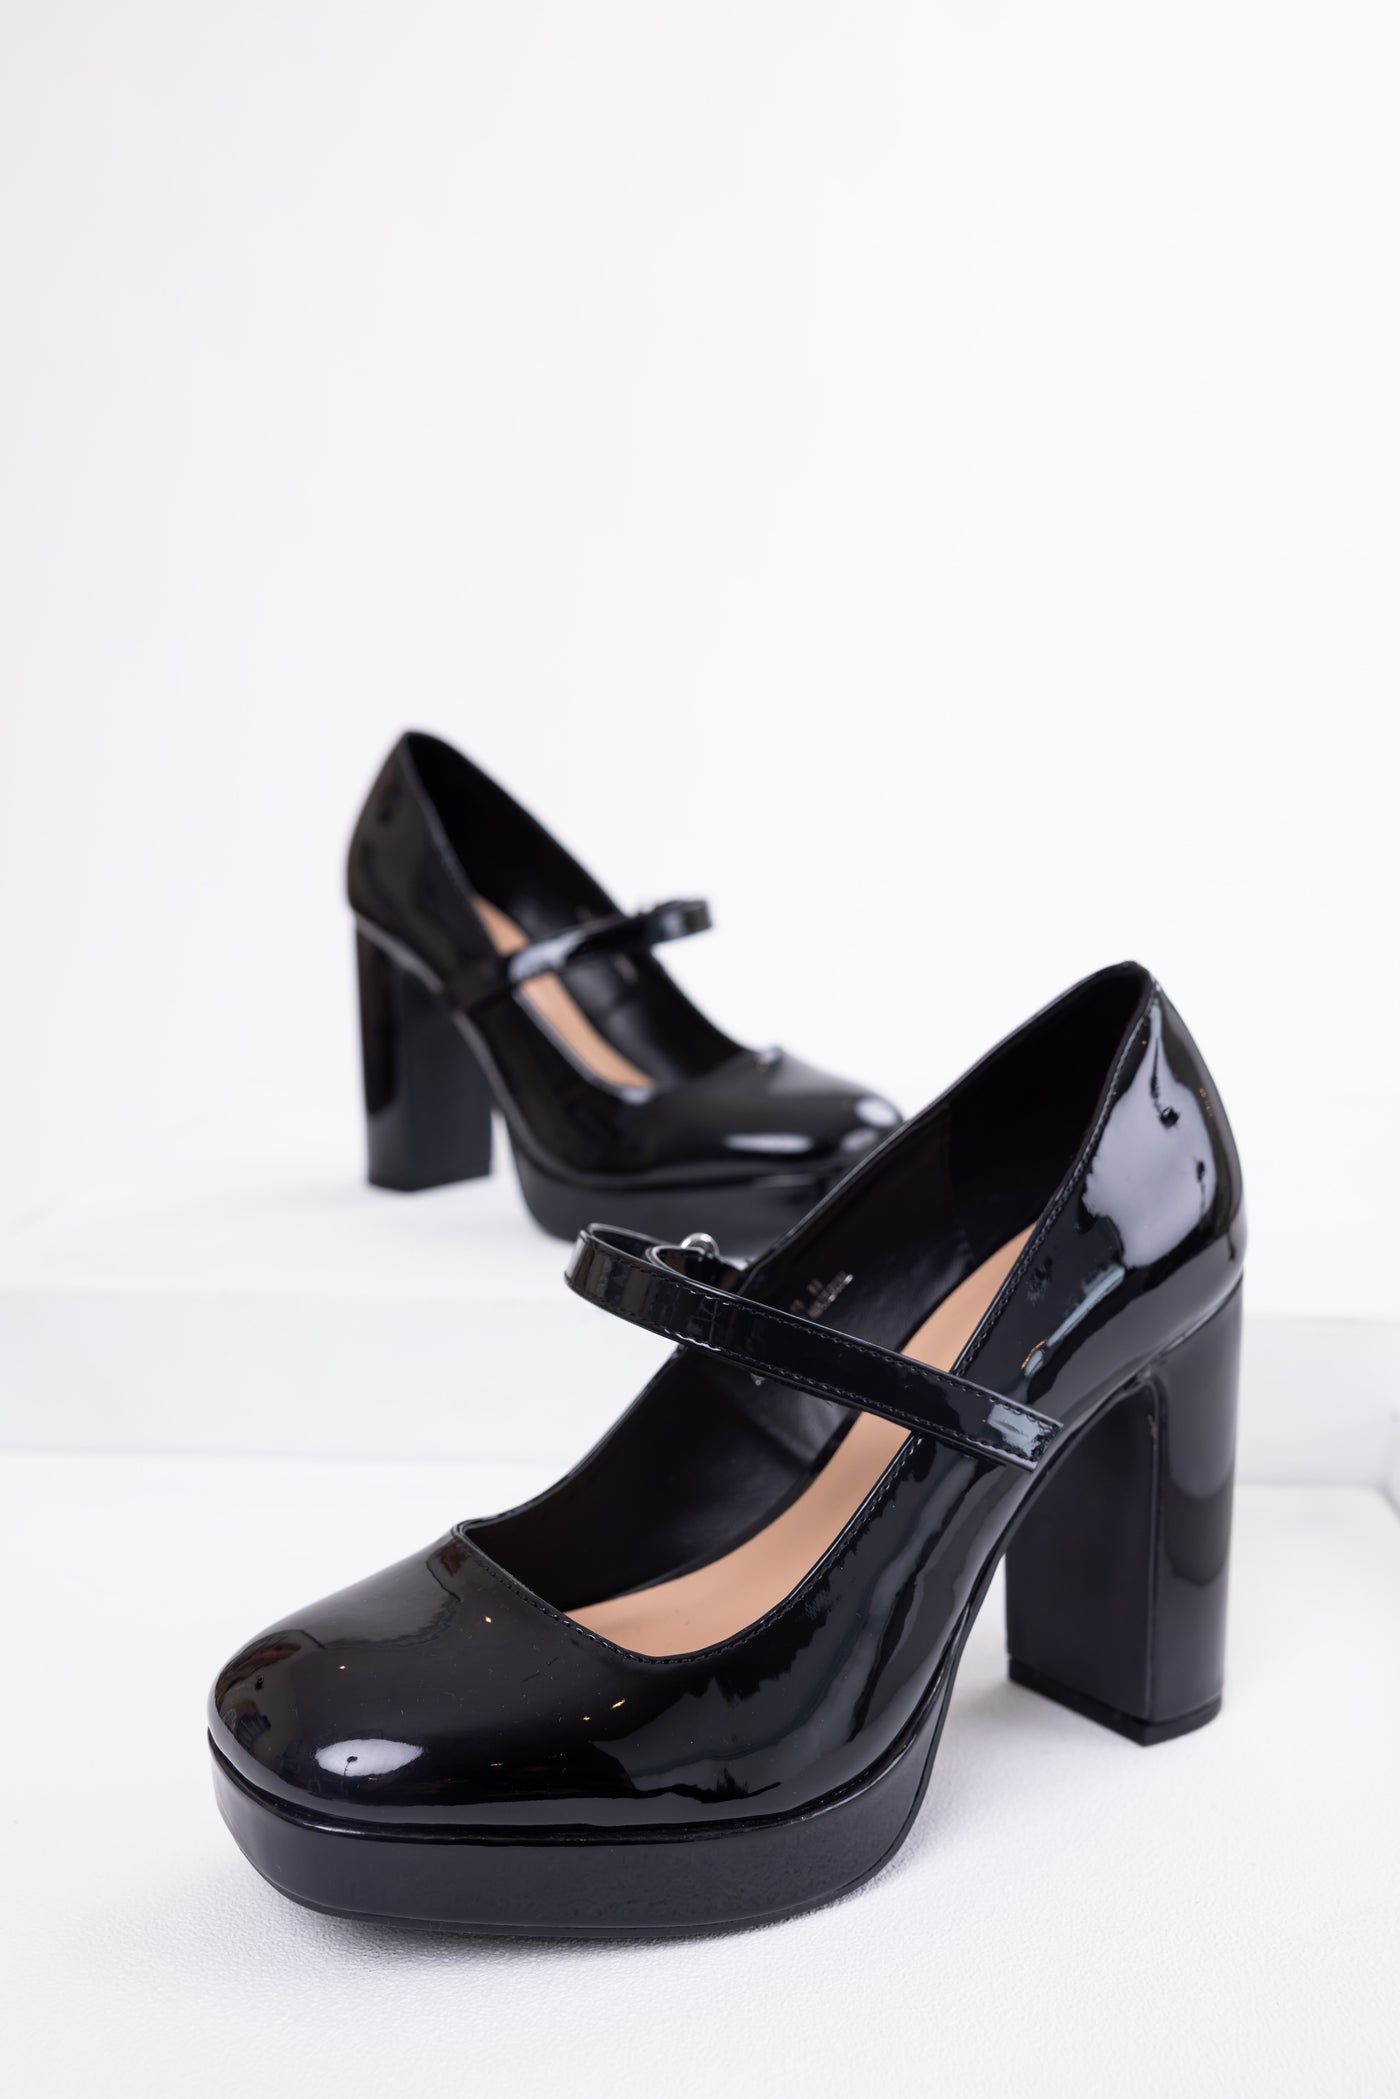 Black Mary Jane Chunky Heels